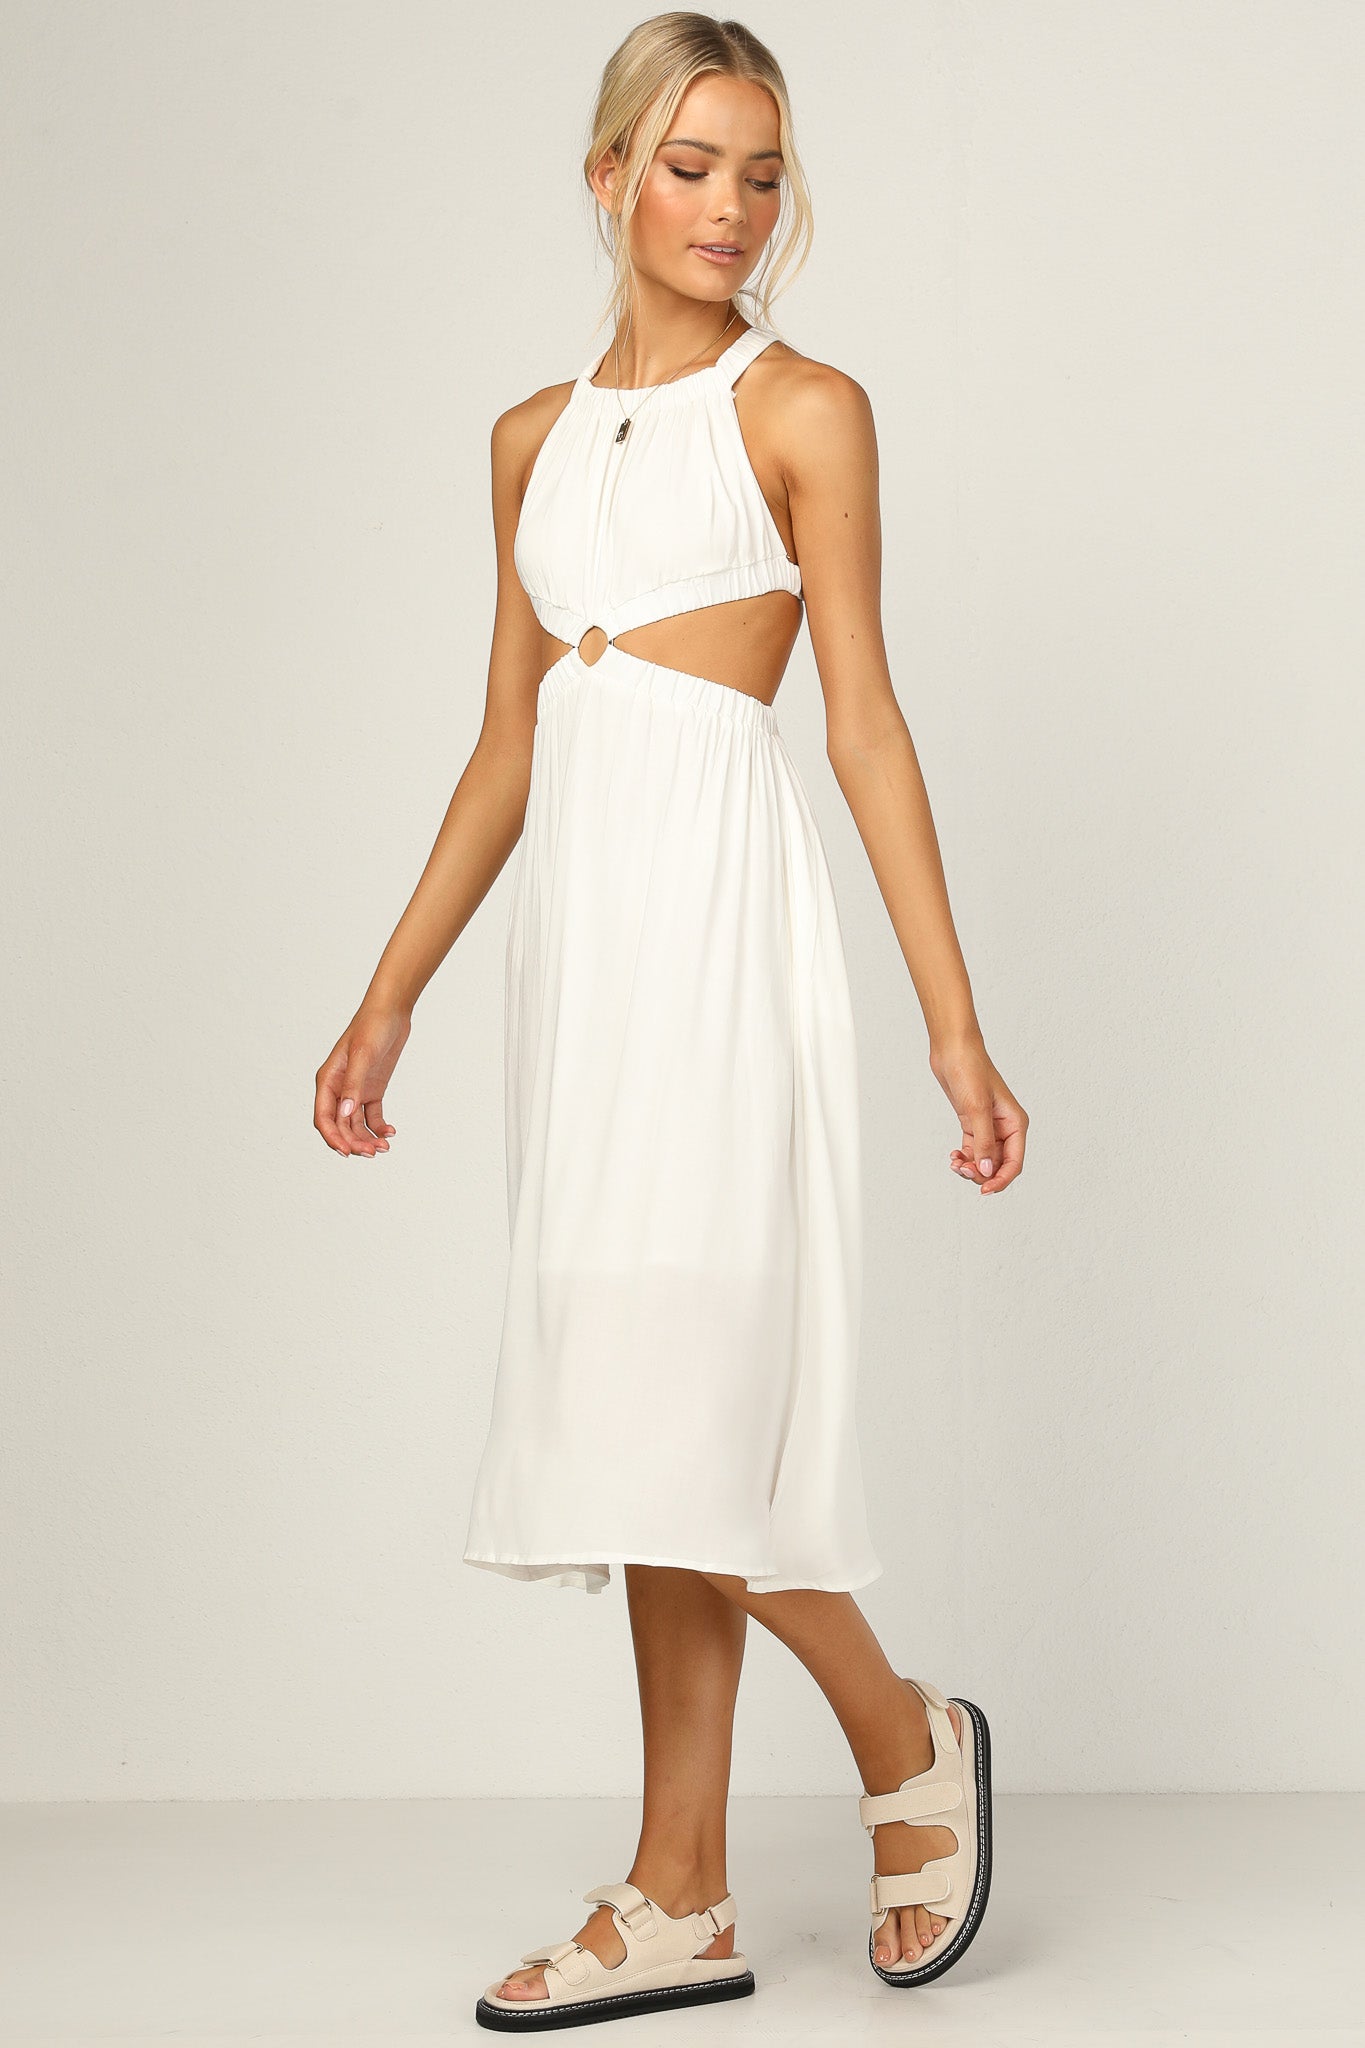 white jordan dress